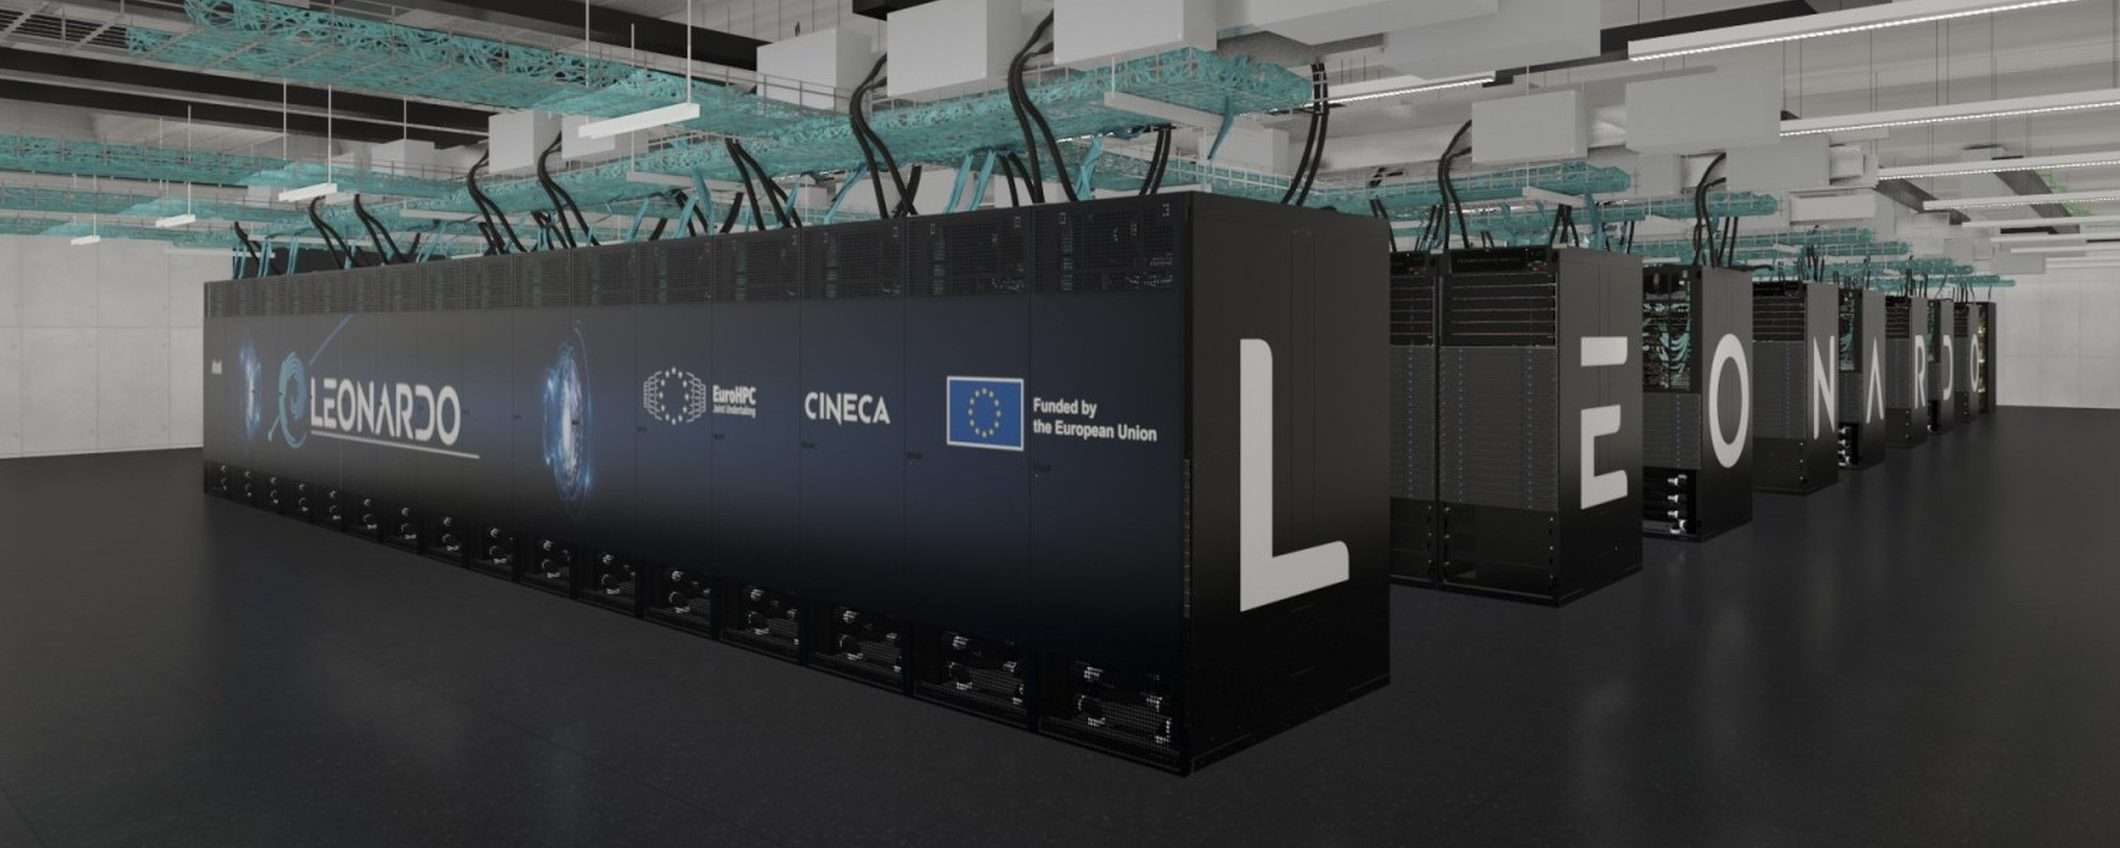 Leonardo: quarto supercomputer più potente al mondo